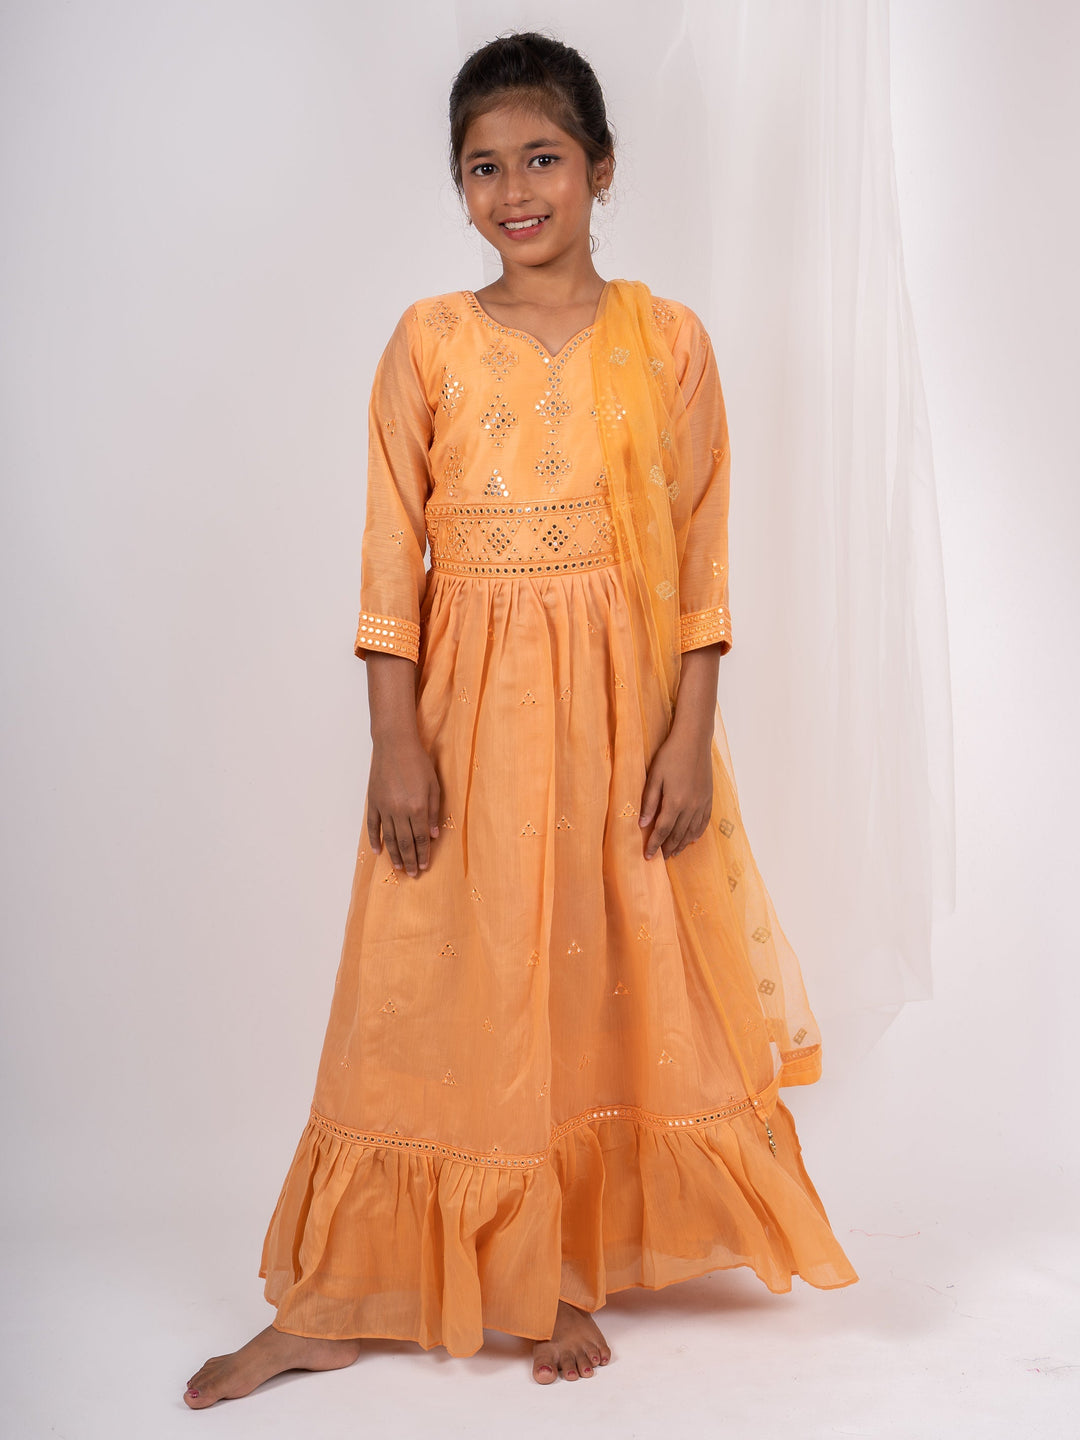 The Nesavu Kids Anarkali Beautiful Mirror Embroidery Anarkali Suit For Girls With Dupatta psr silks Nesavu 24 (5Y-6Y) / Orange GA027